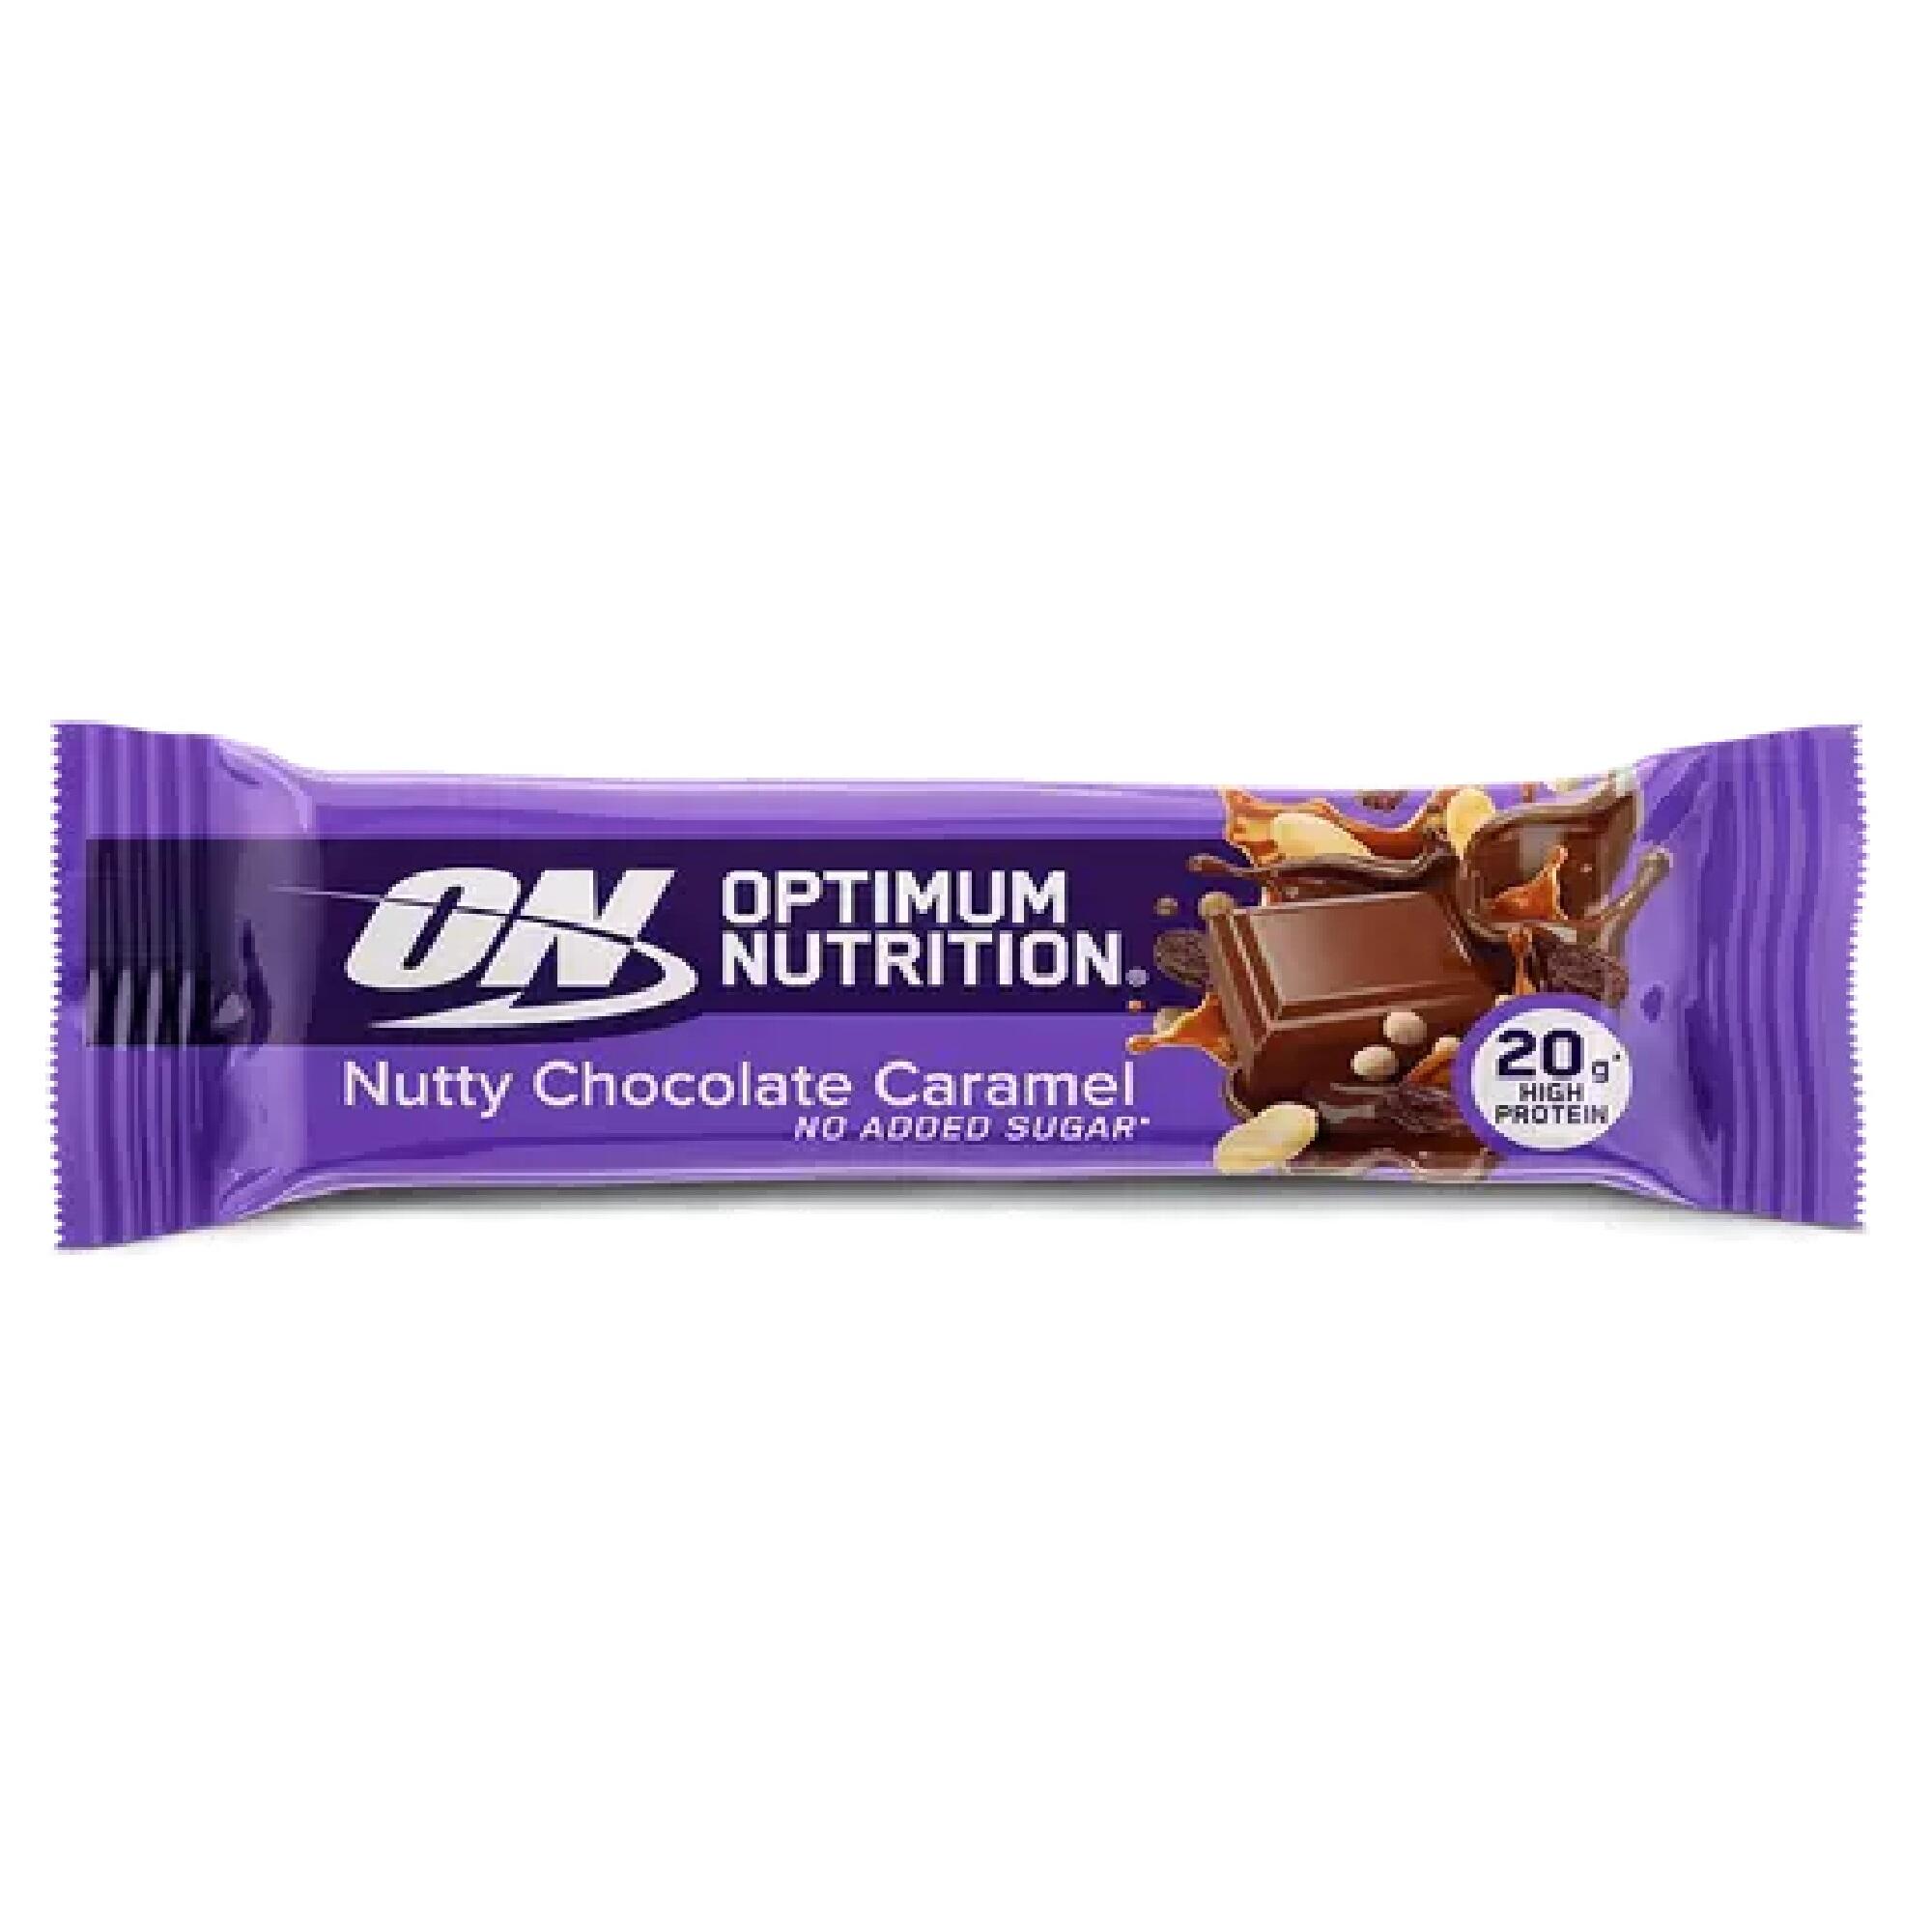 OPTIMUM NUTRITION Nutty Chocolate Caramel Protein Bar